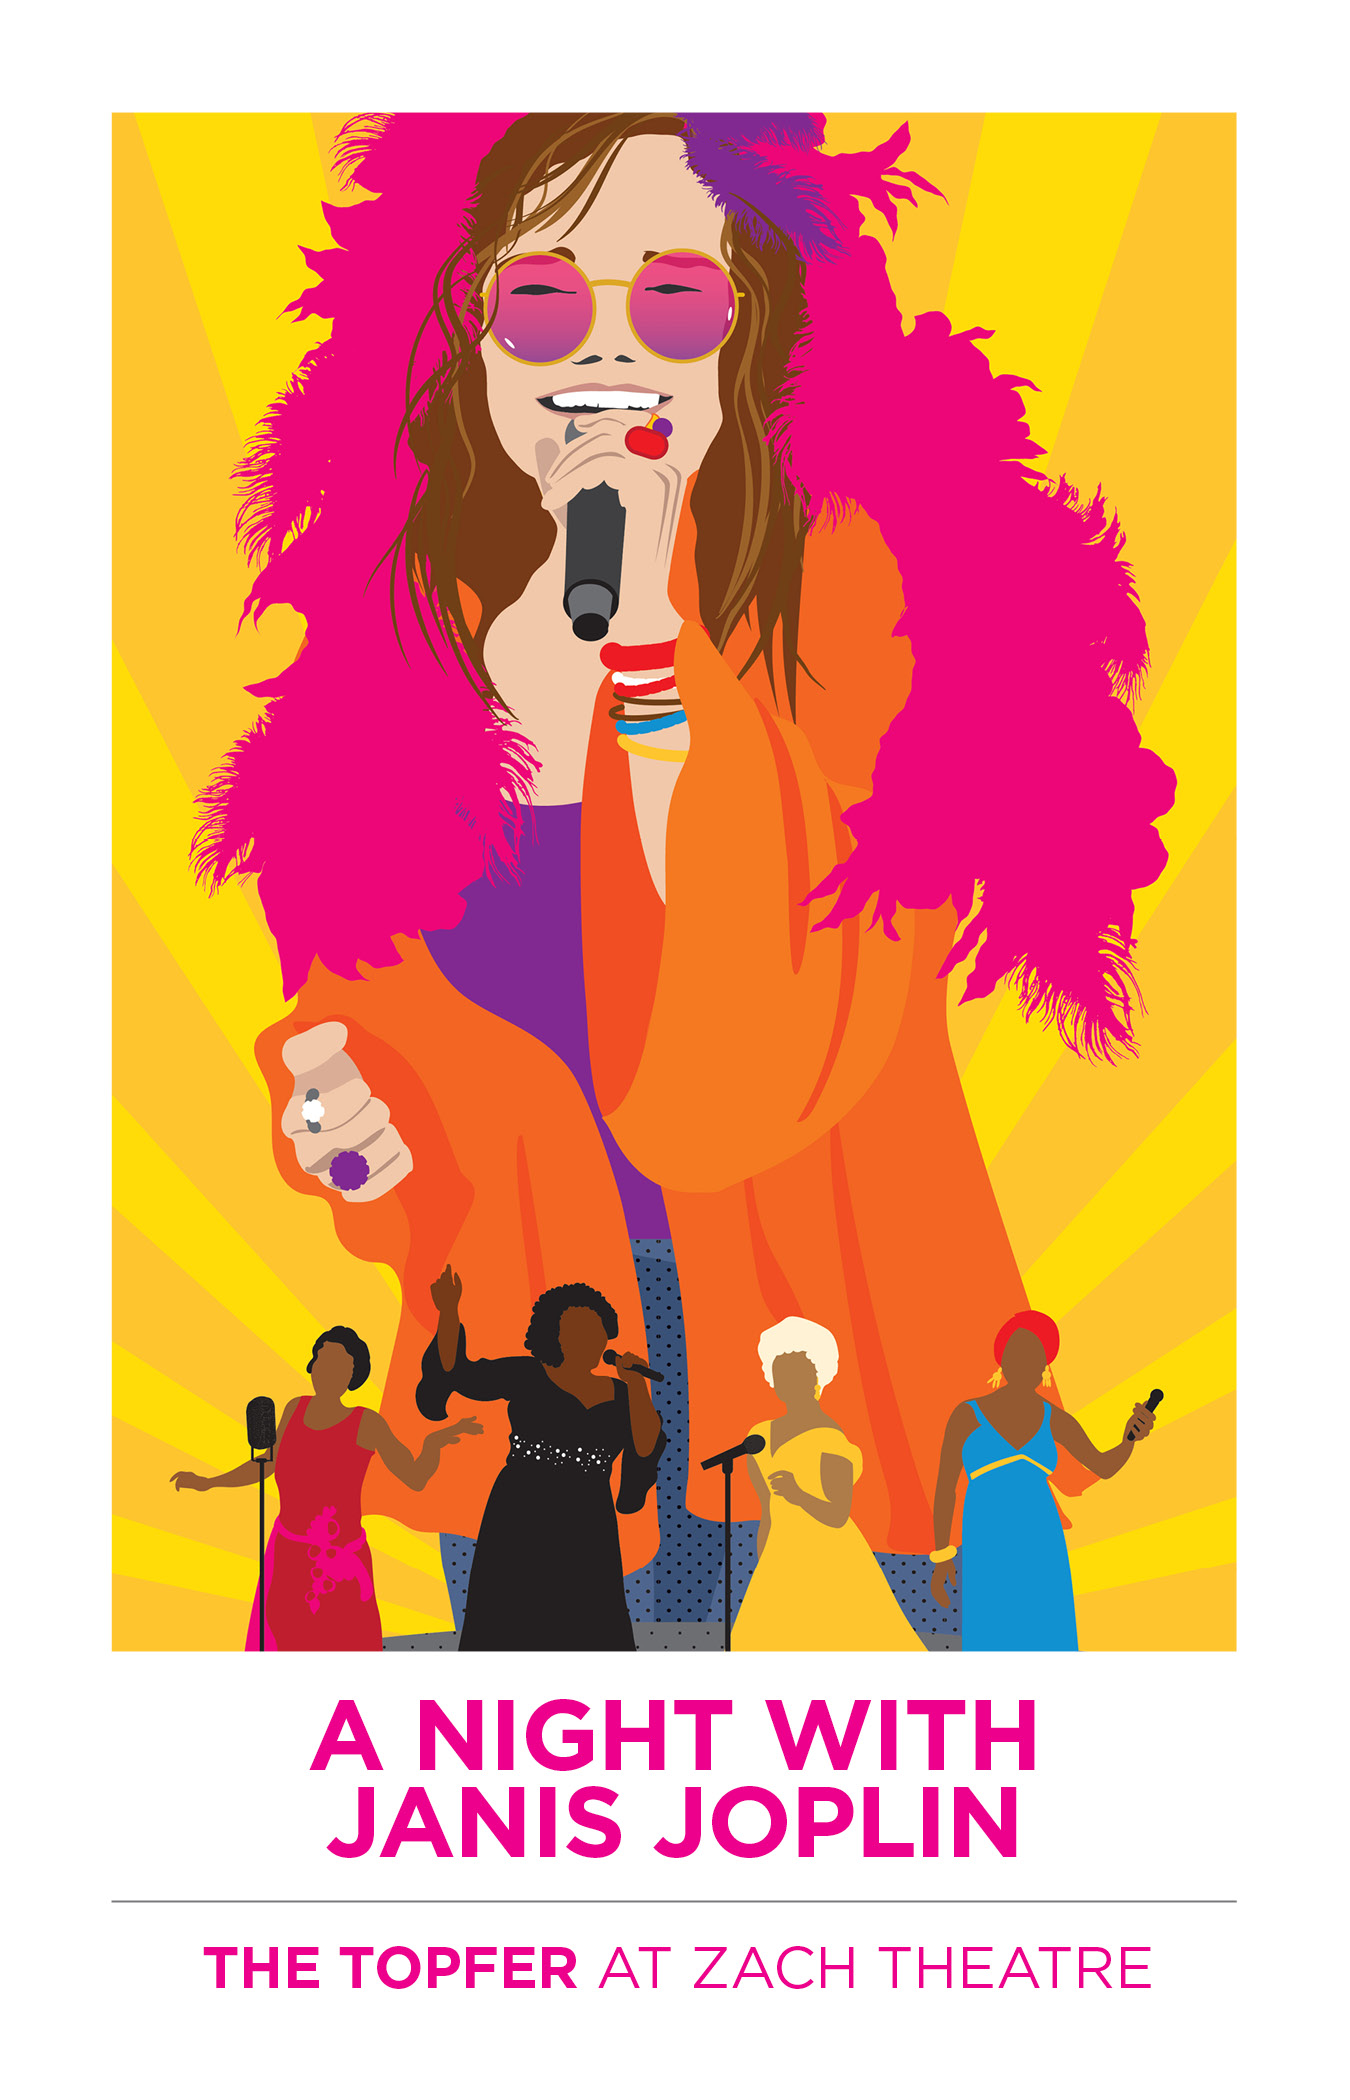 A Night with Janis Joplin by Zach Theatre